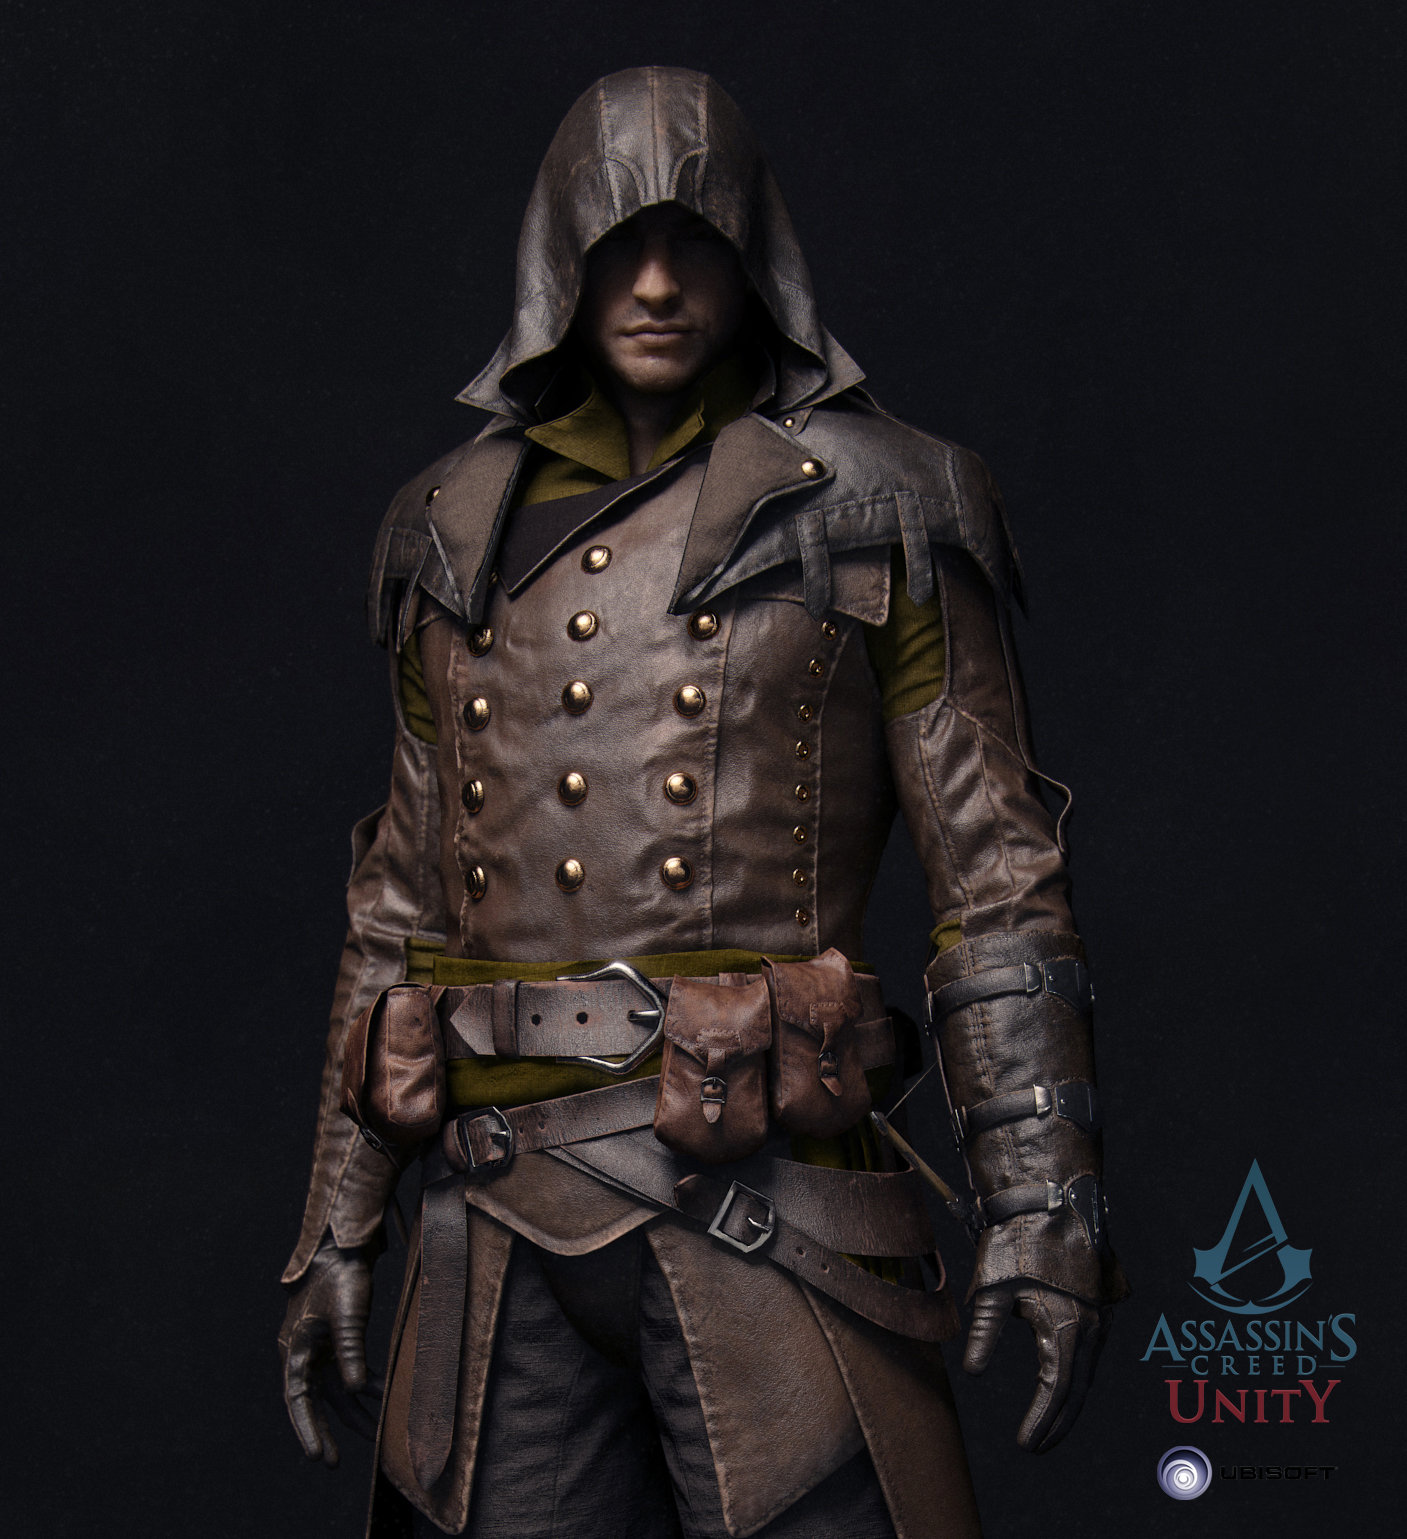 ArtStation - Assassins creed Unity : Characters